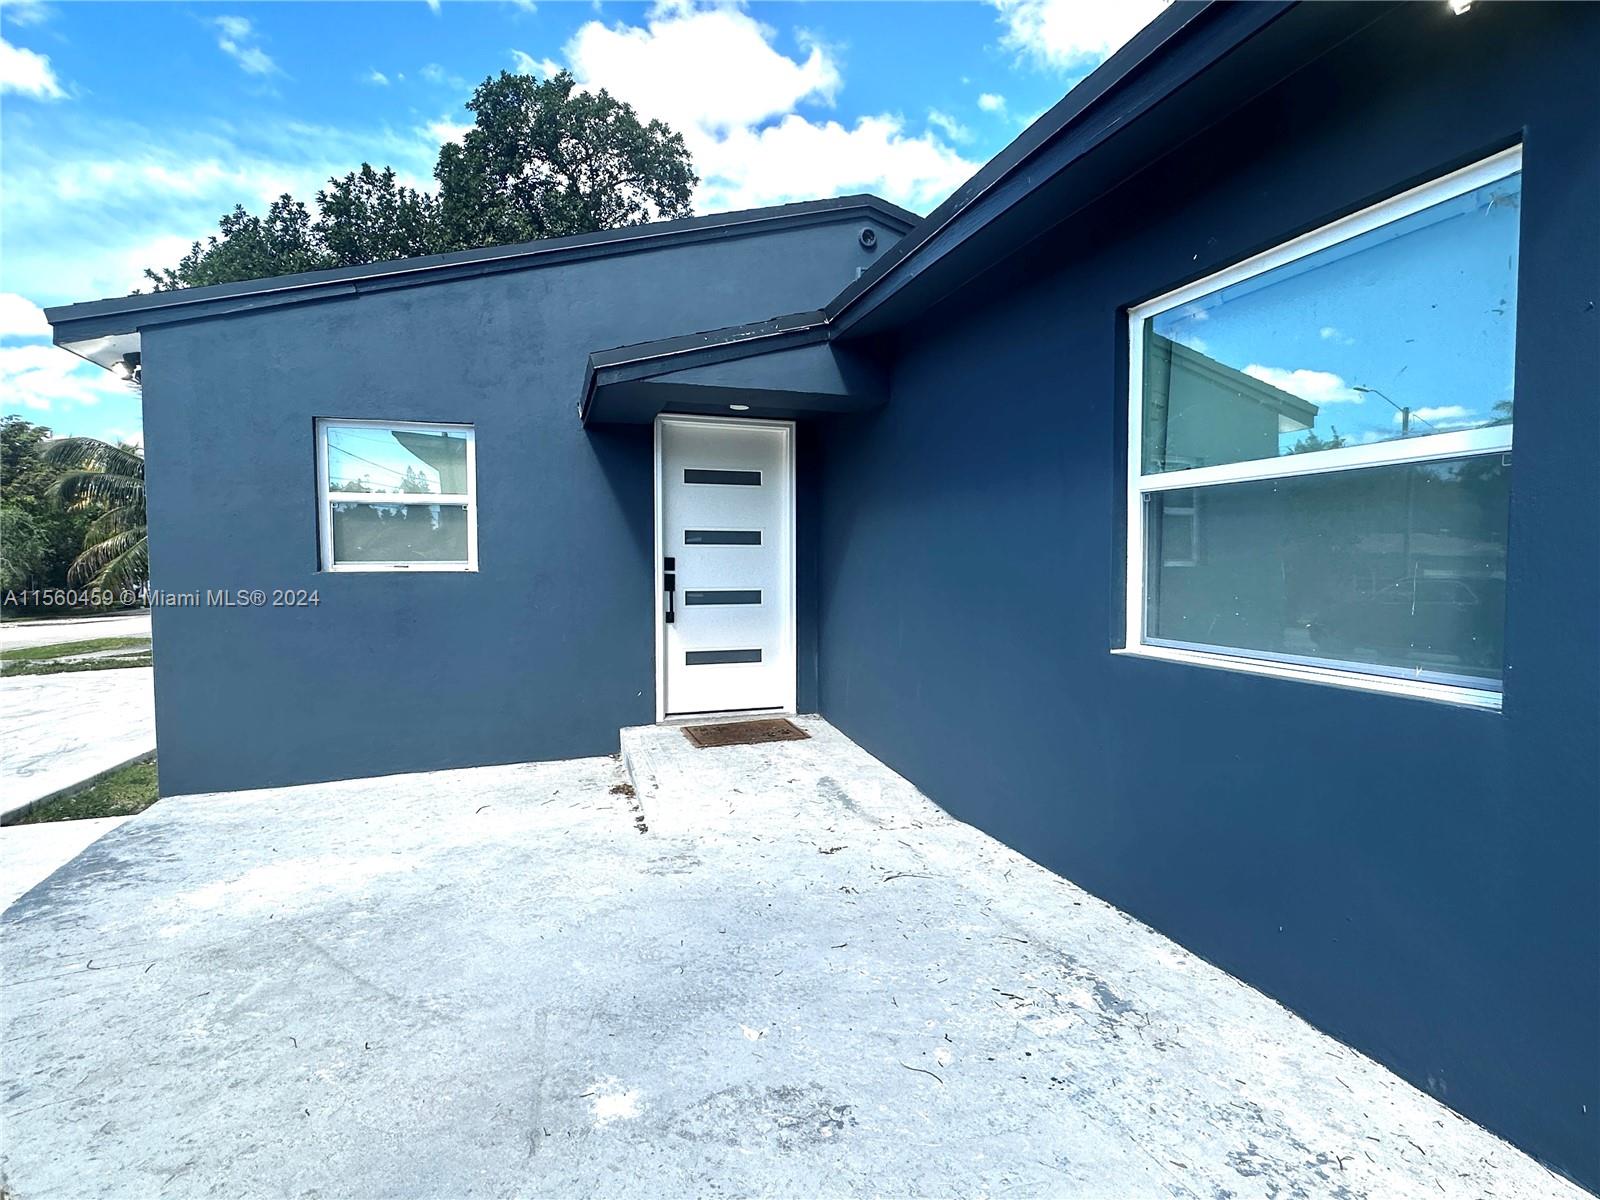 Rental Property at 541 Ne 142nd St St, North Miami, Miami-Dade County, Florida -  - $1,300,000 MO.